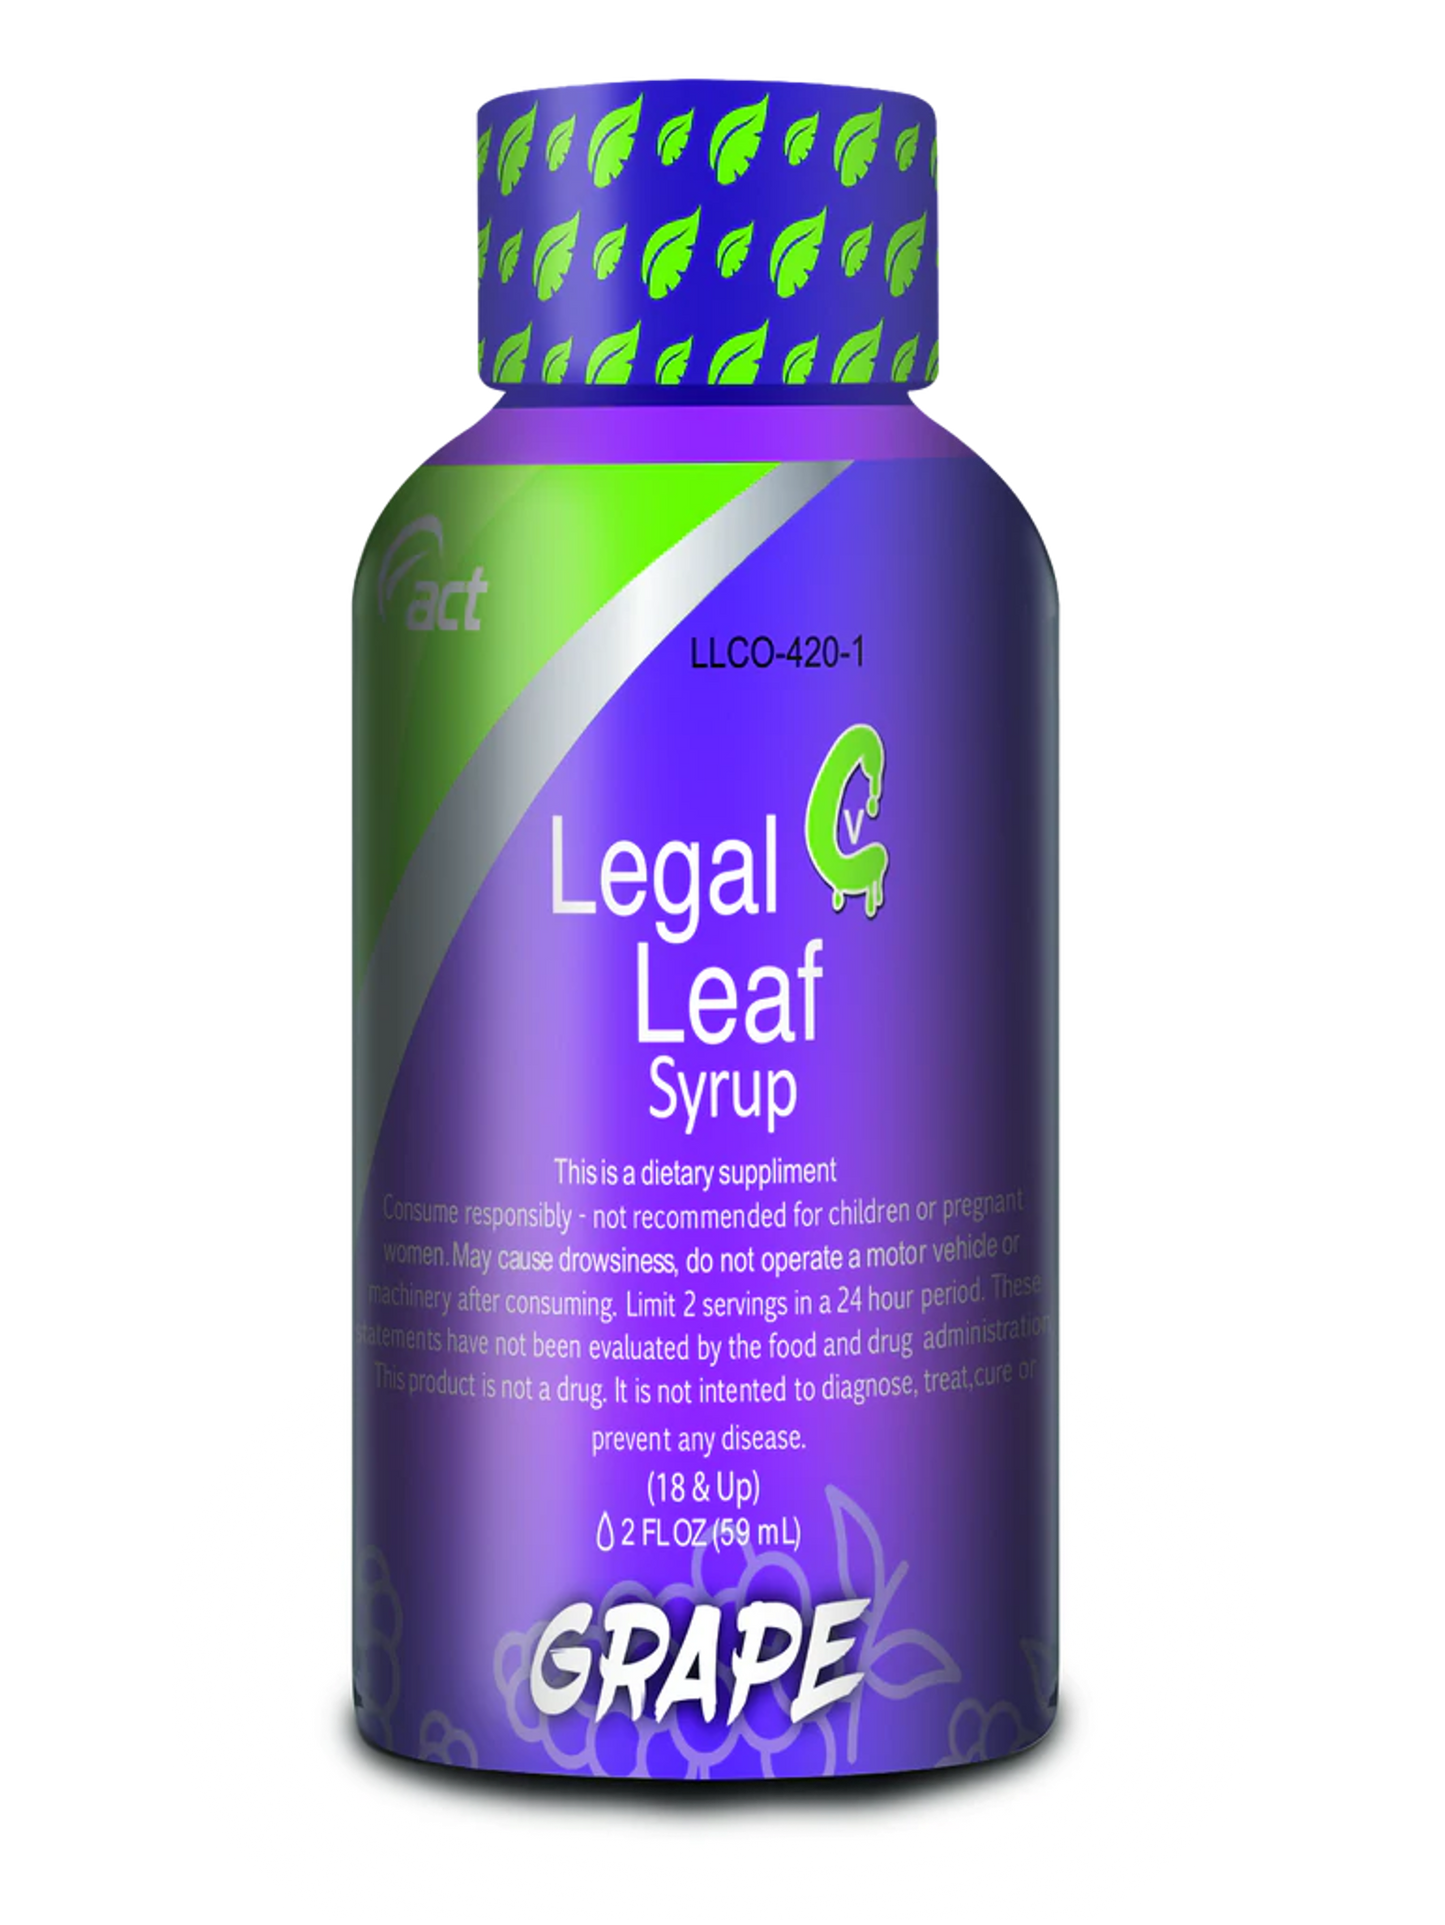 Legal Lean Syrup 2oz Bottle *New Flavors!*